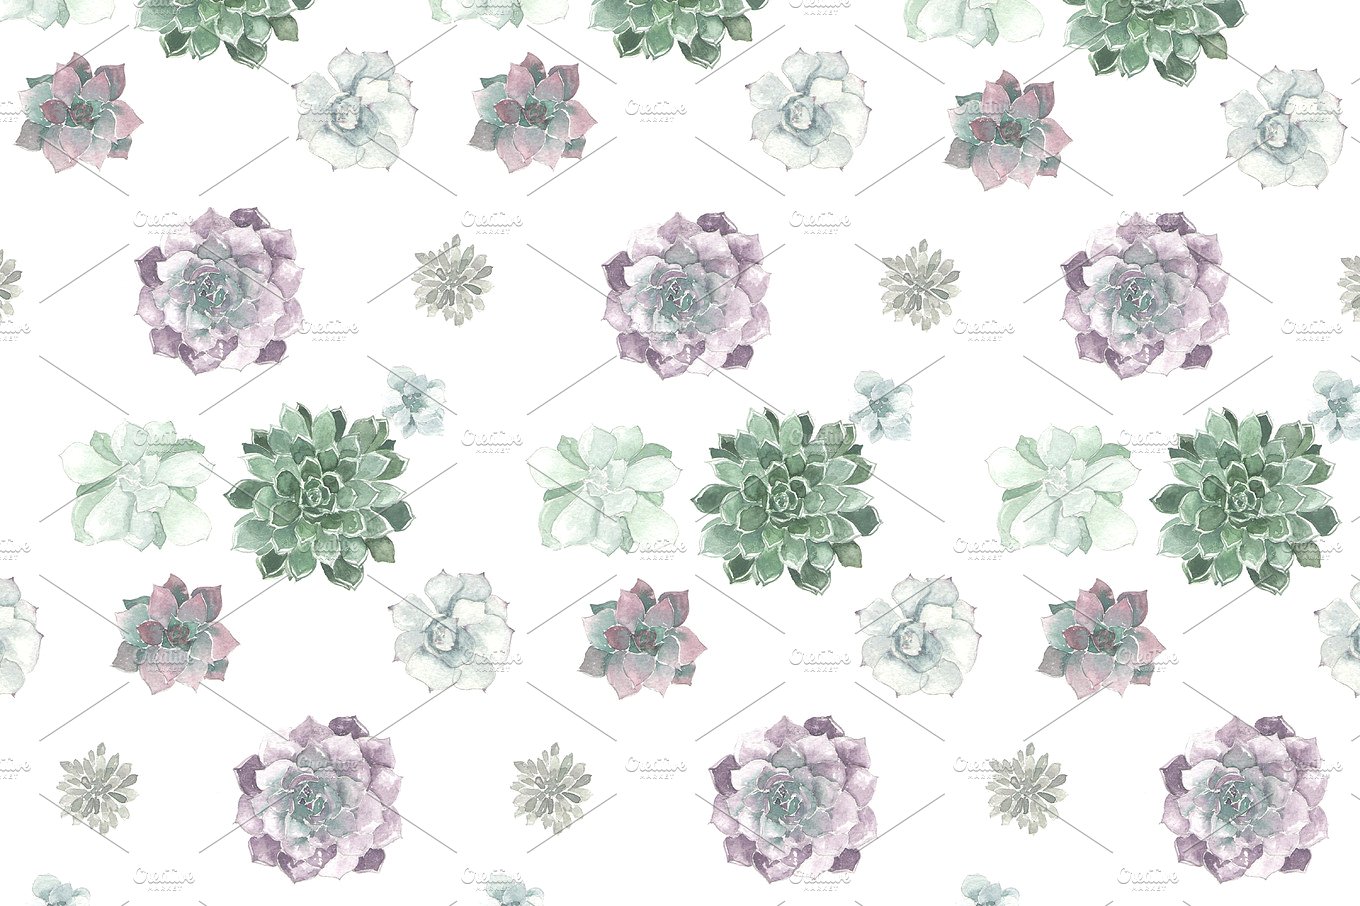 多肉花卉水彩插画 Watercolor succulent pattern插图(1)